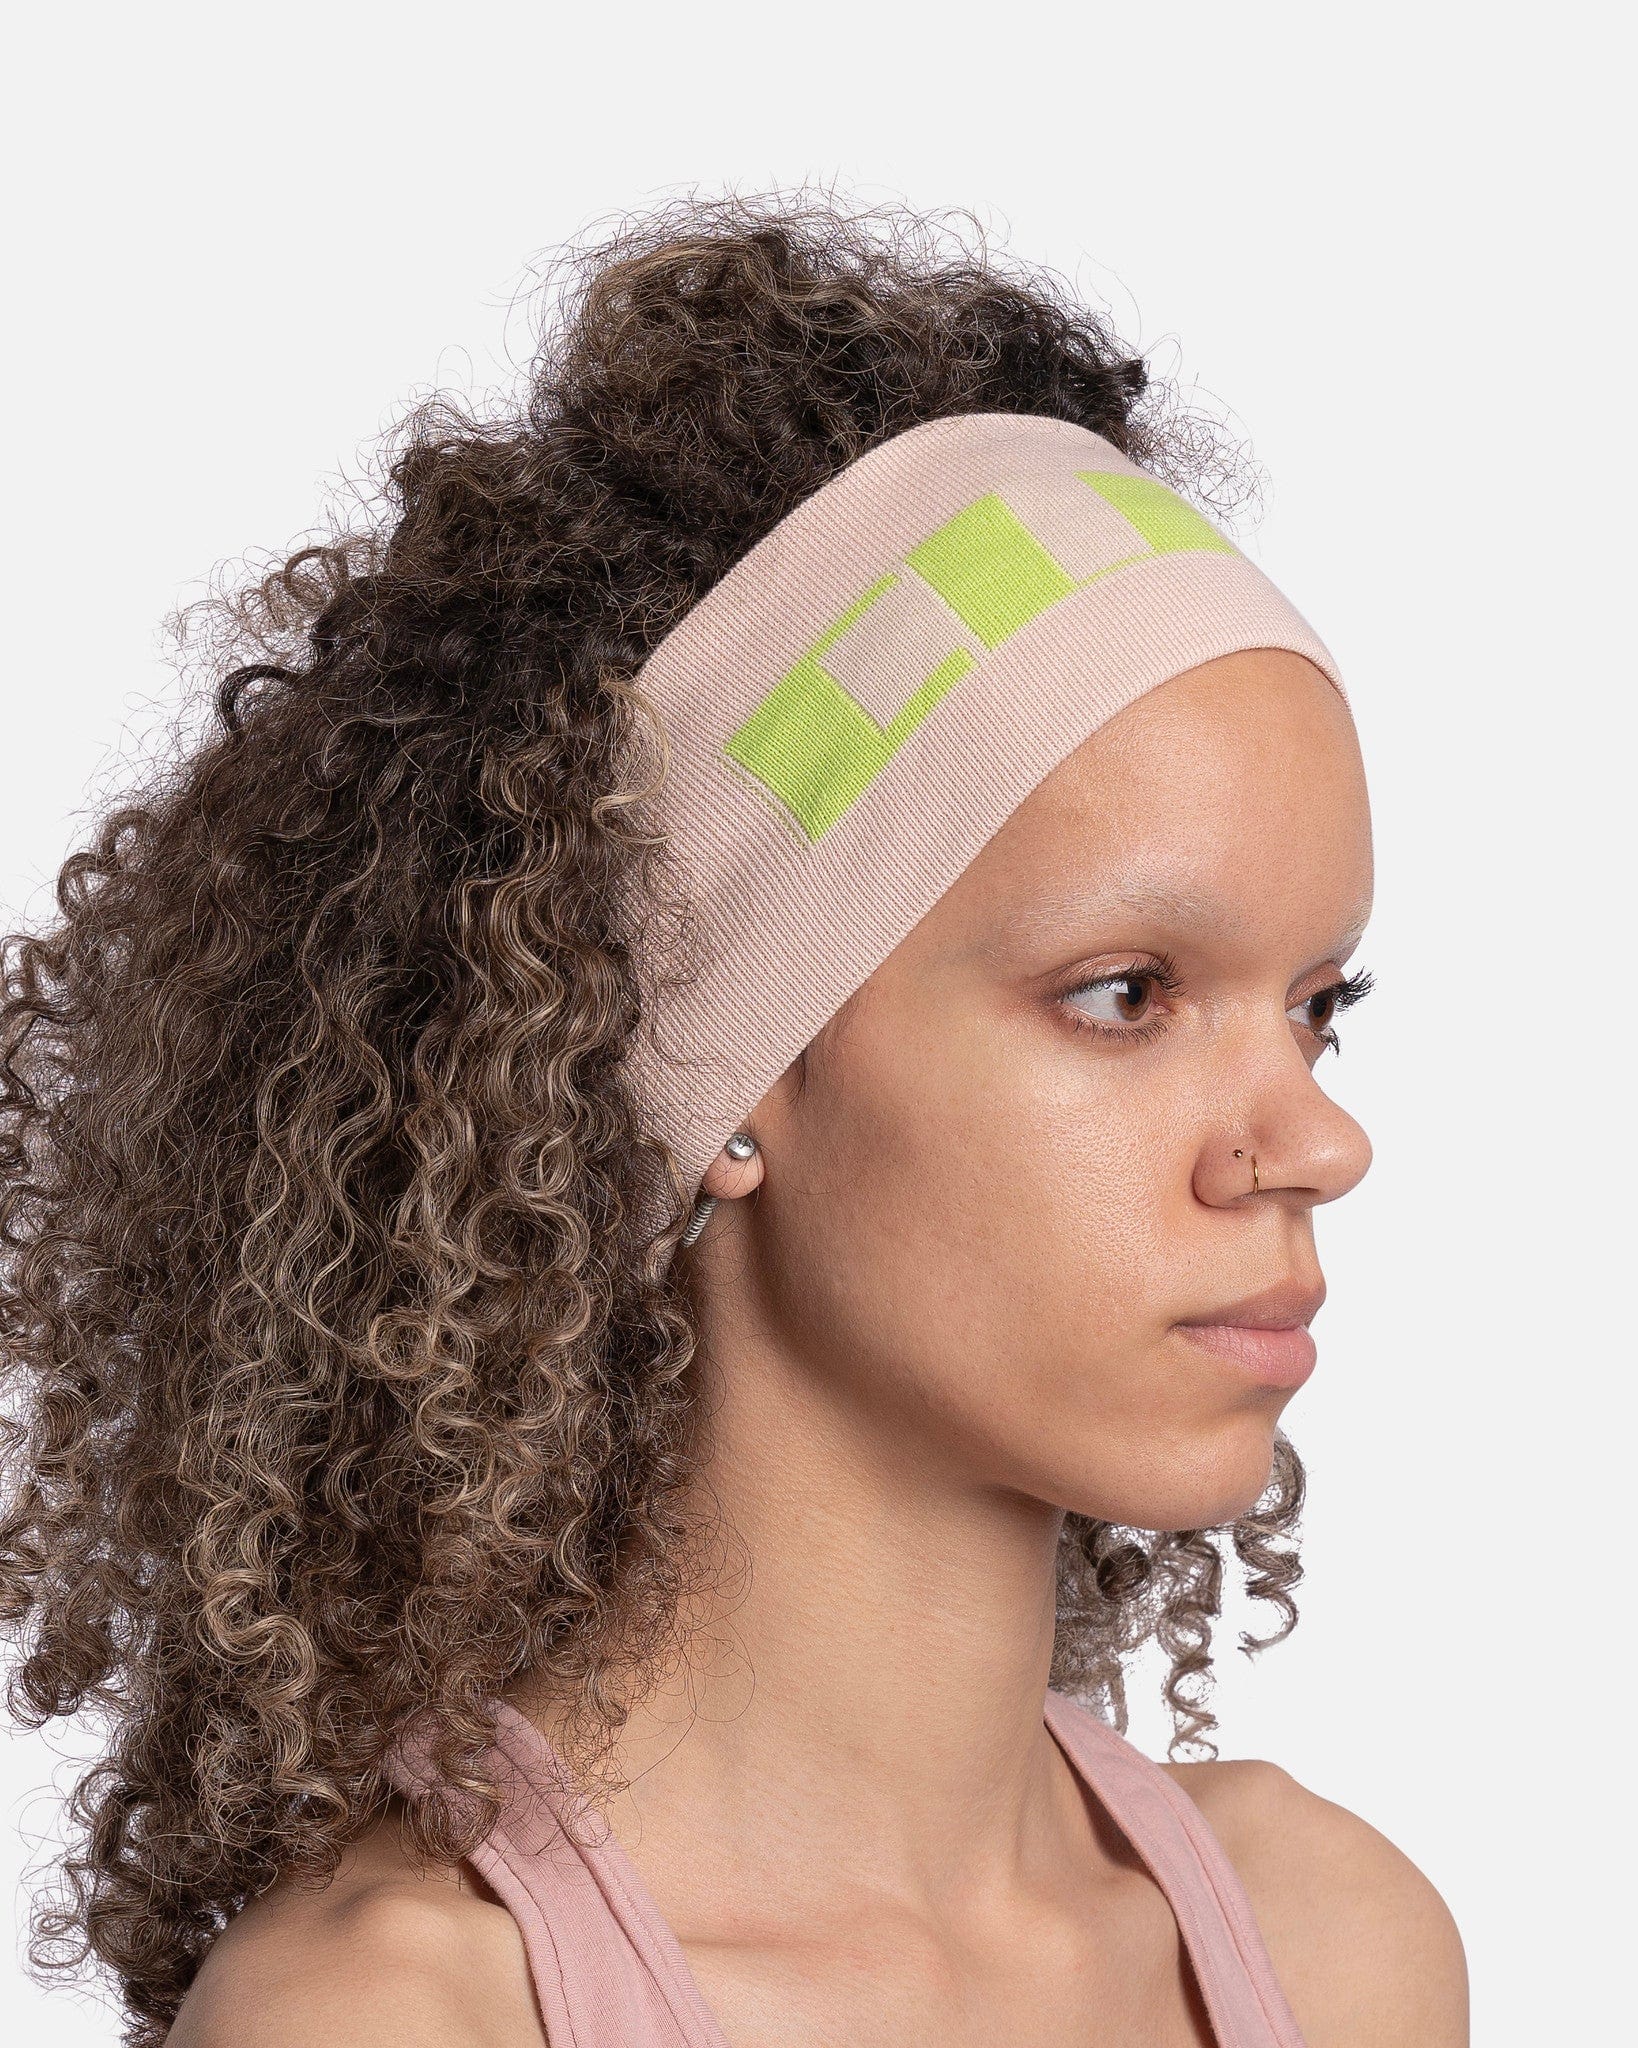 Cunty Headband in Faded Pink/Neon Green